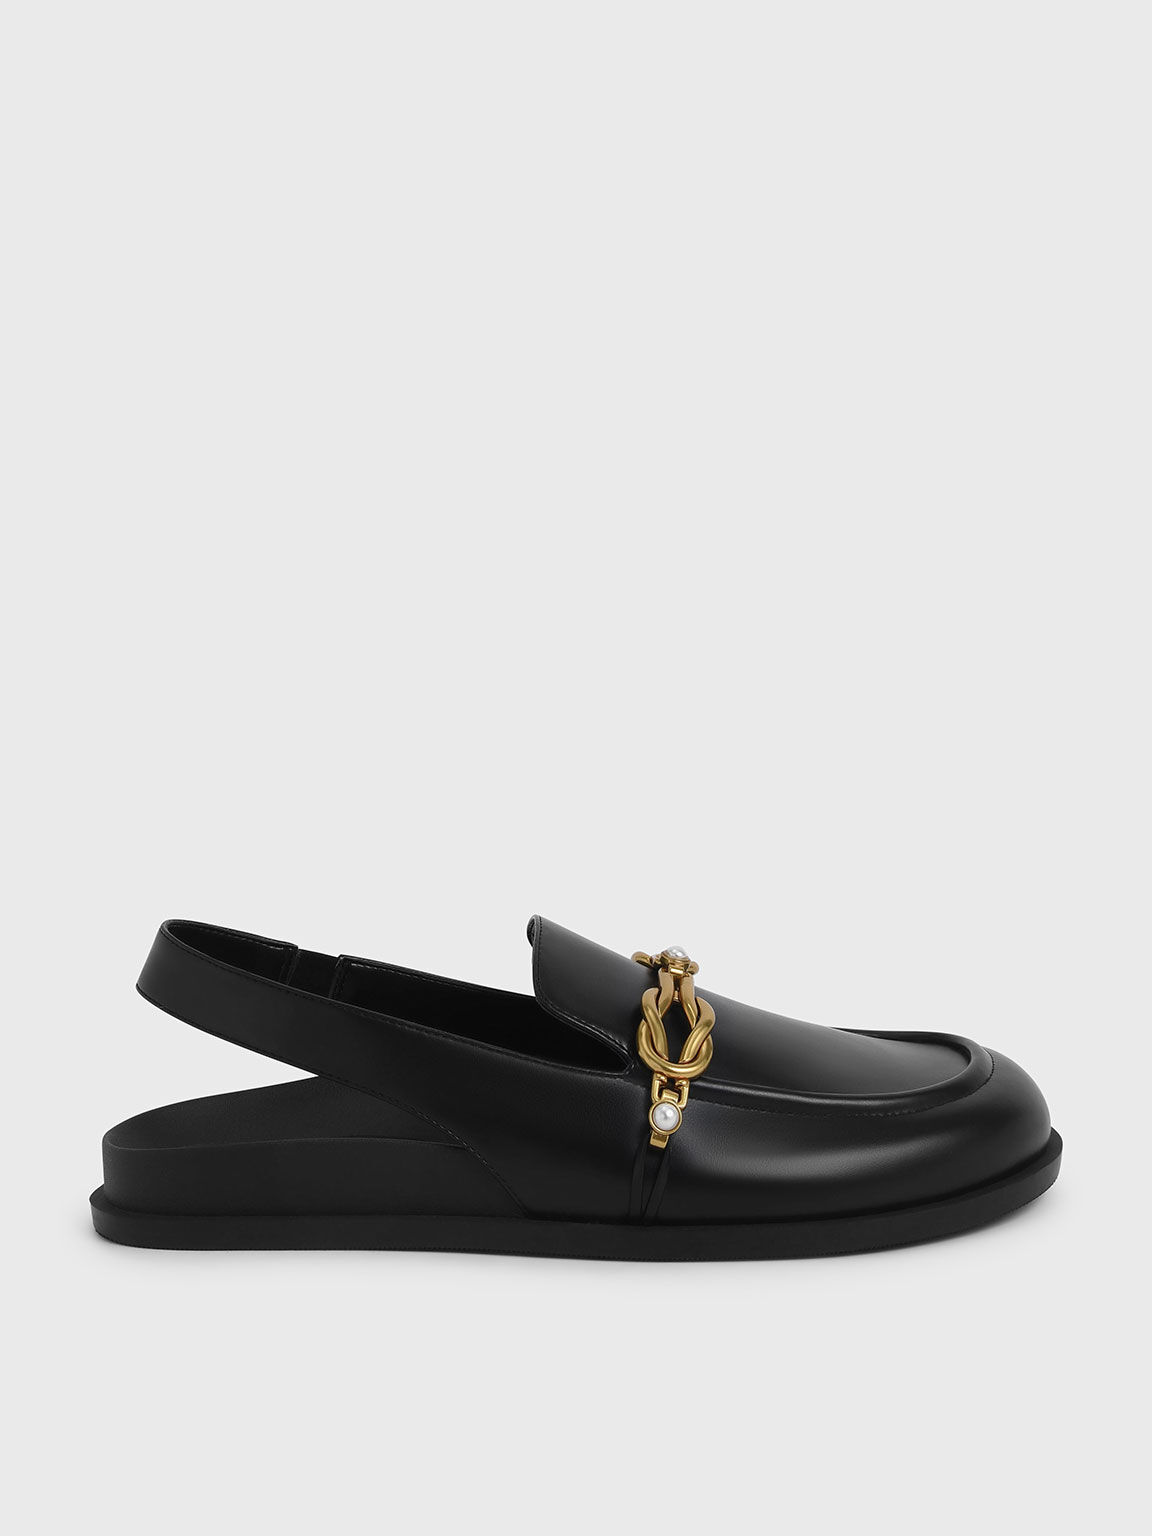 Beaded Chain-Embellished Slingback Loafers, Black, hi-res